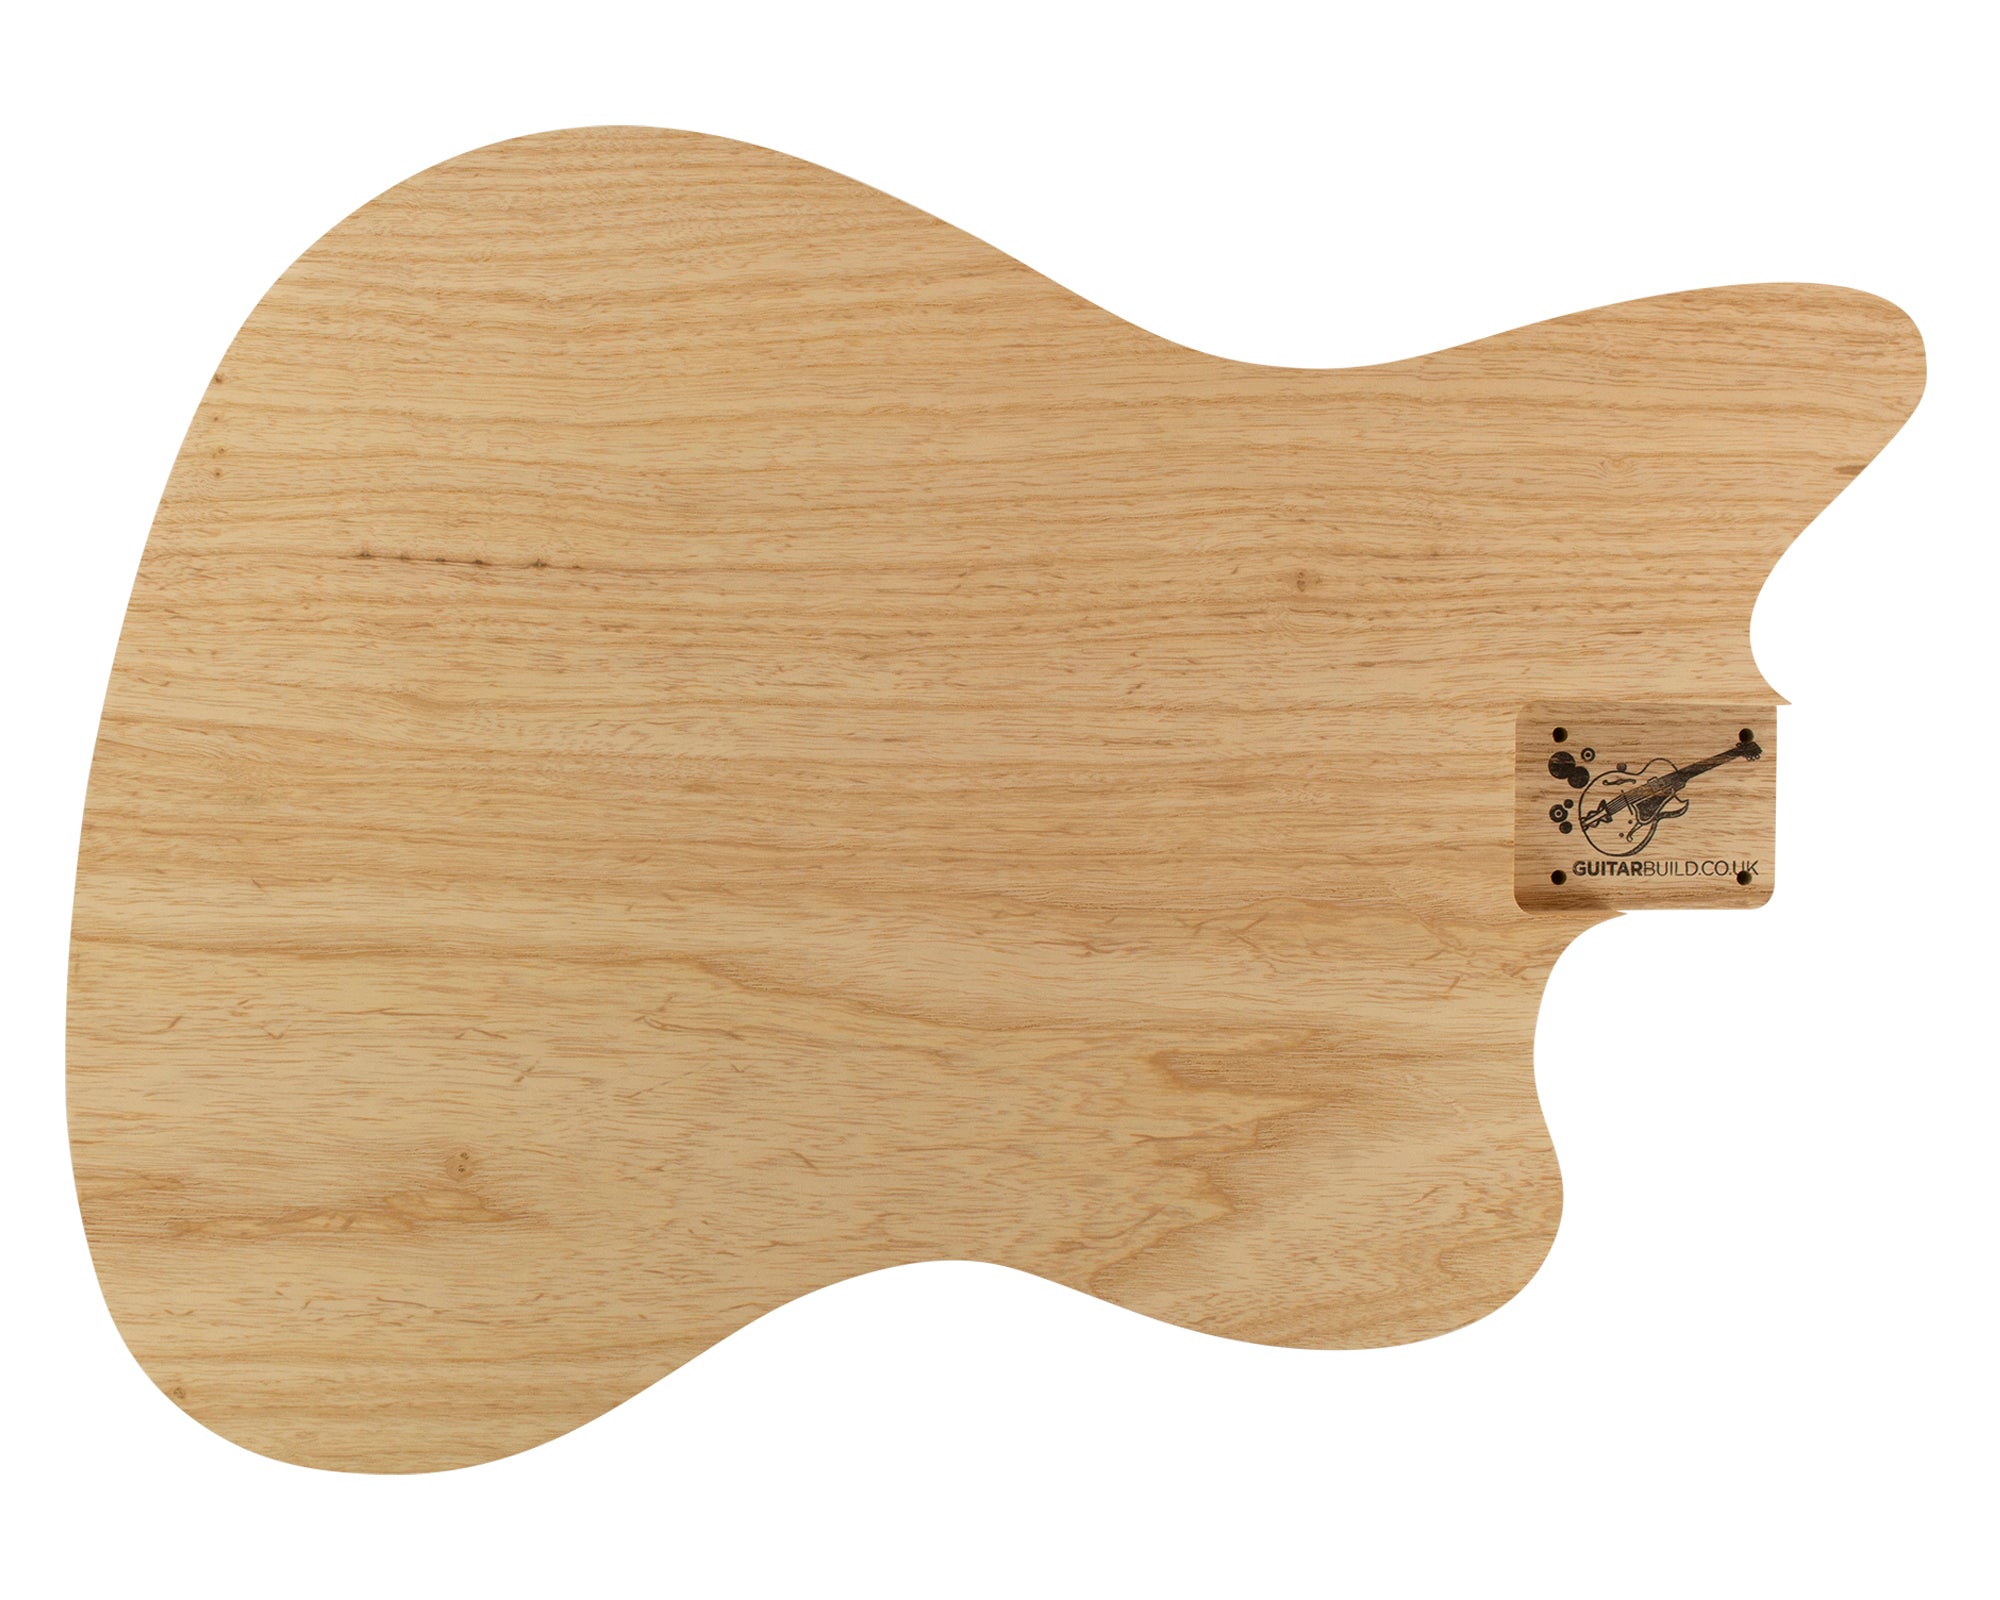 TM BODY shaped Wood Blanks-Shaped Wood Blank-Guitarbuild